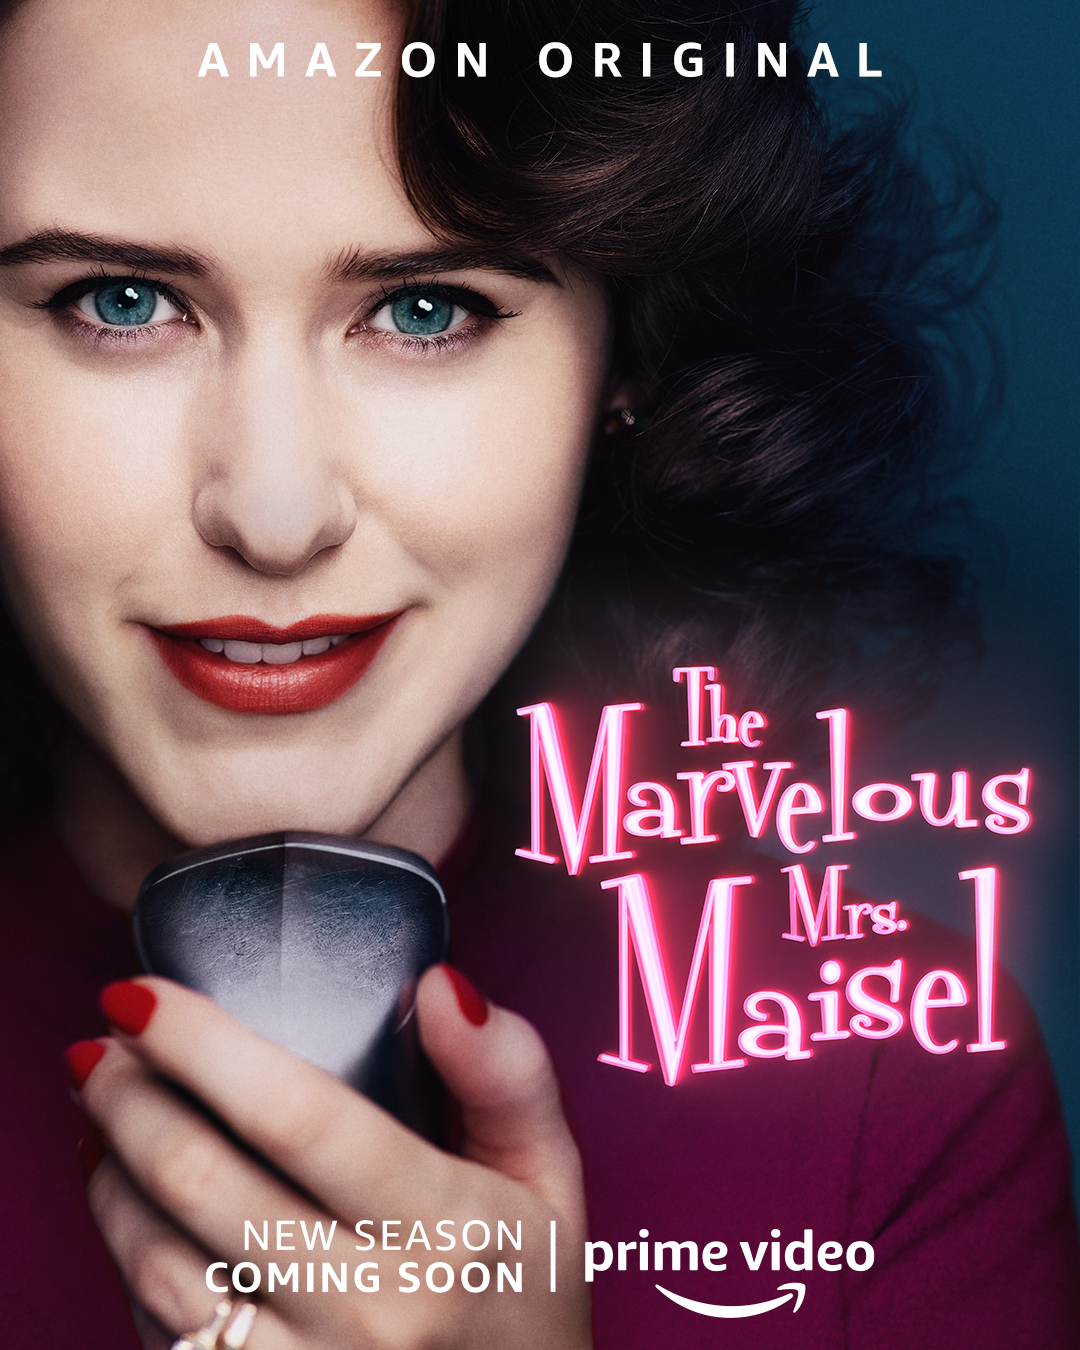 The marvelous mrs Maisel poster